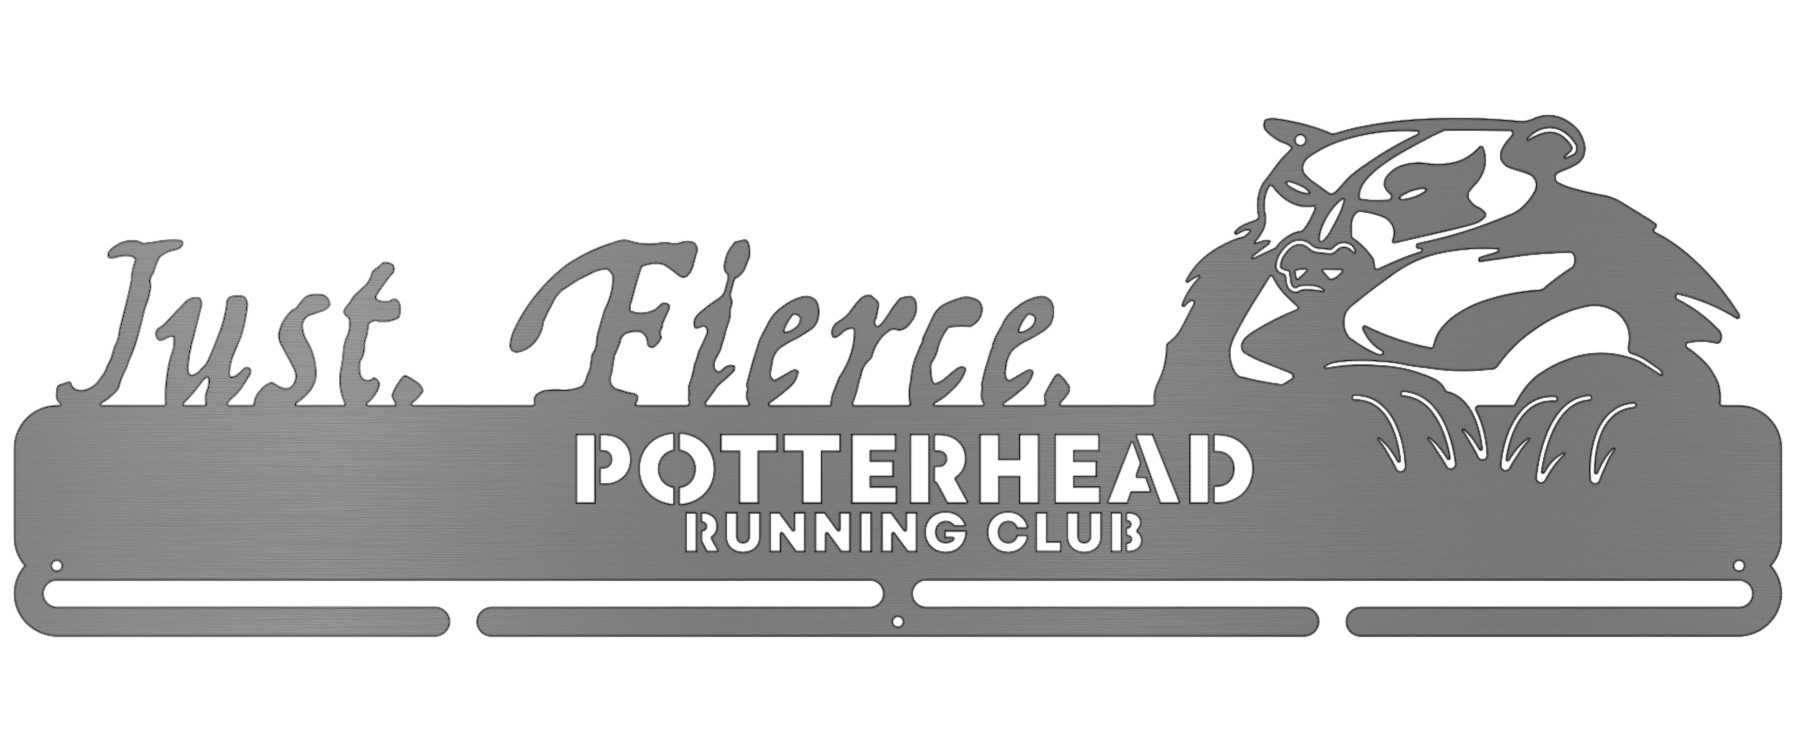 Potterhead Running Club - Just Fierce - NO Perfect Prefect